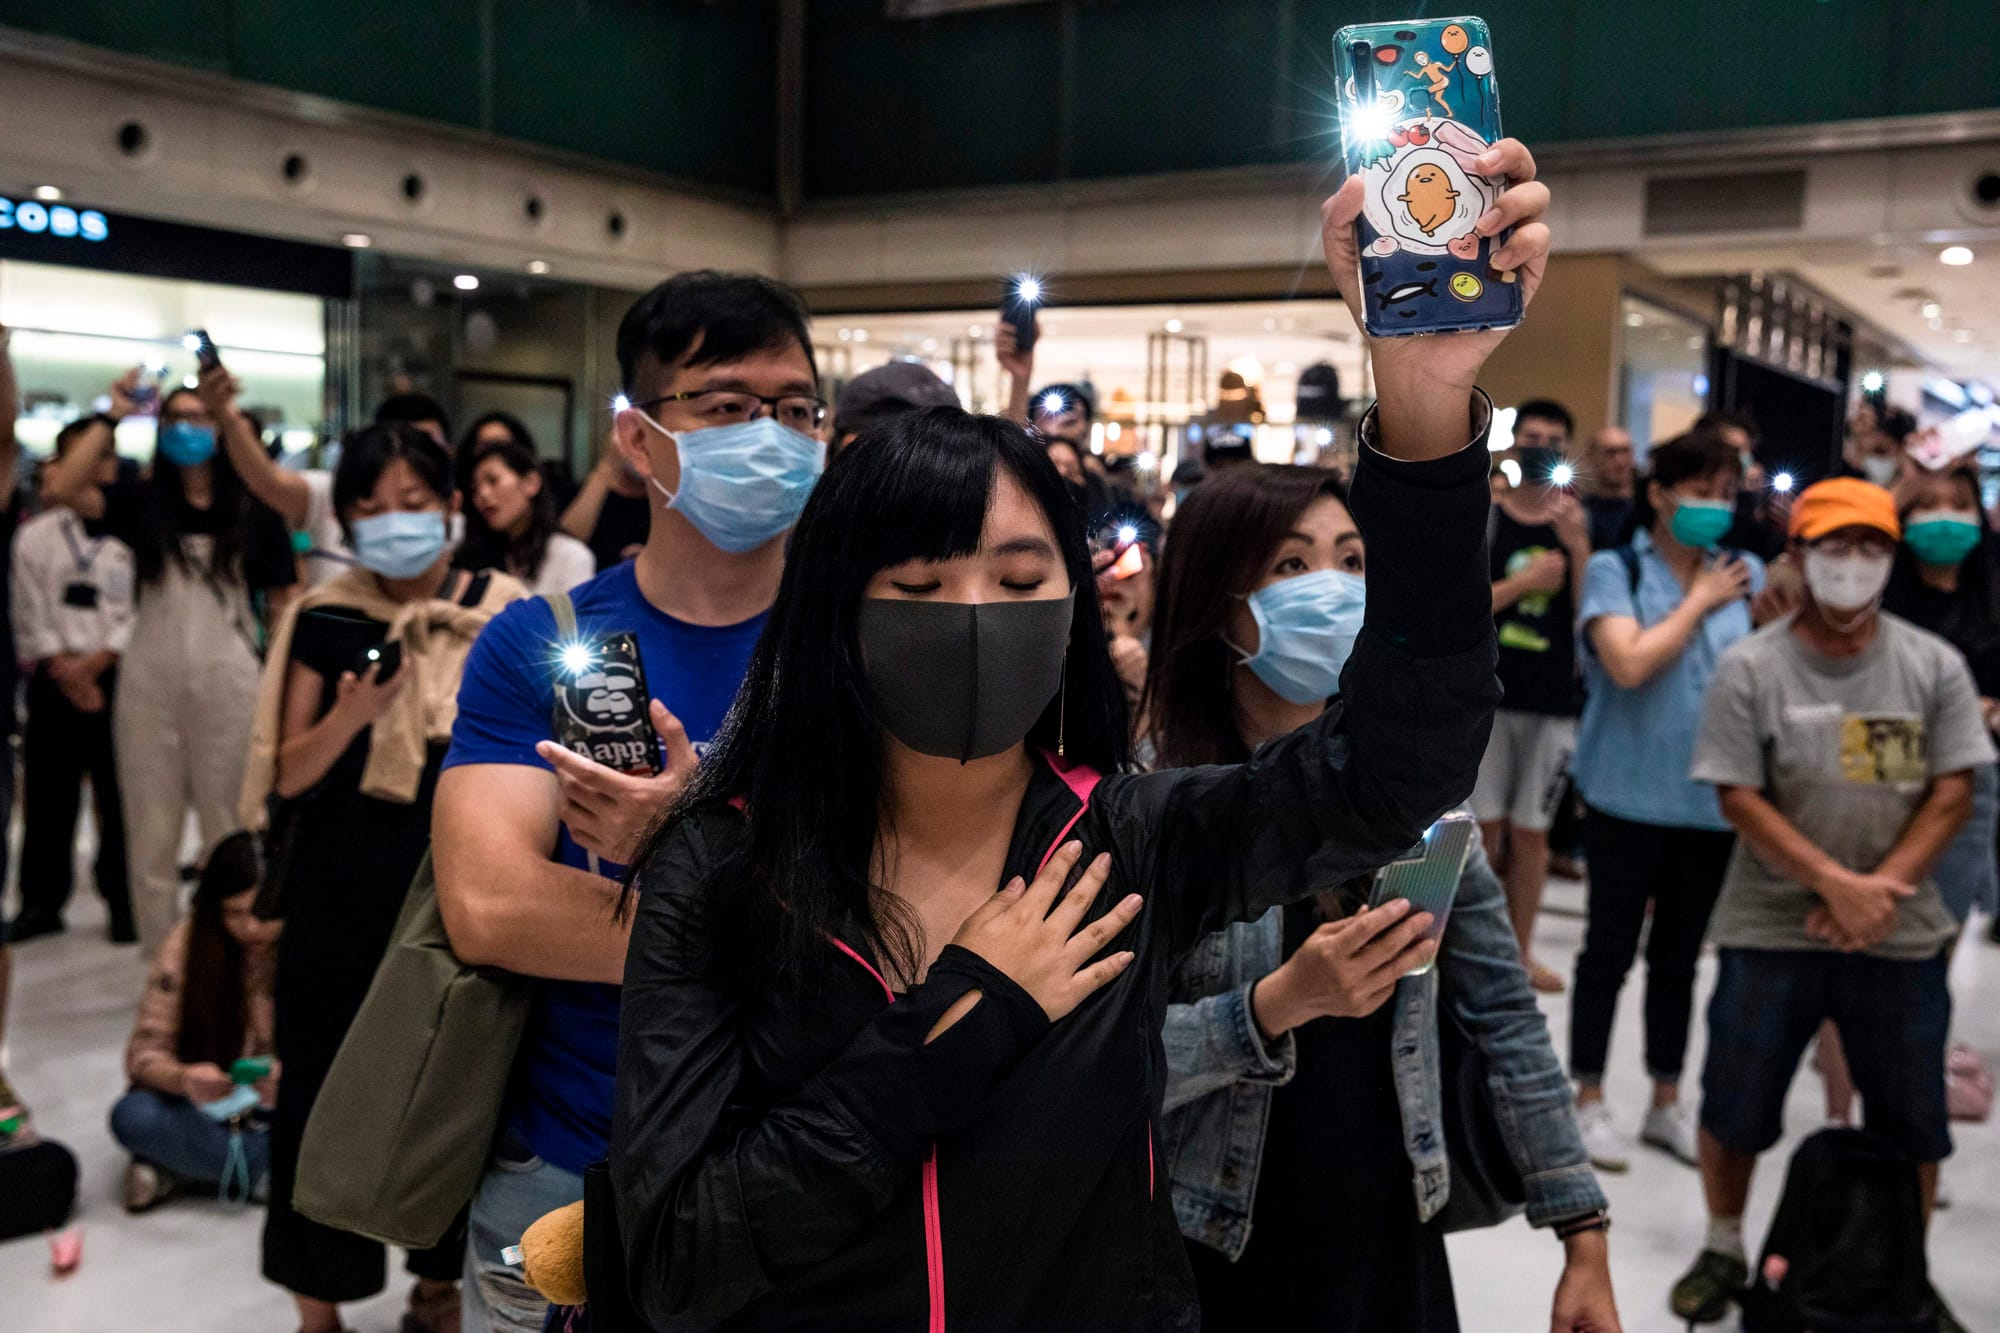 hong kong woman protest glory to hong kong anthem phone flashlight